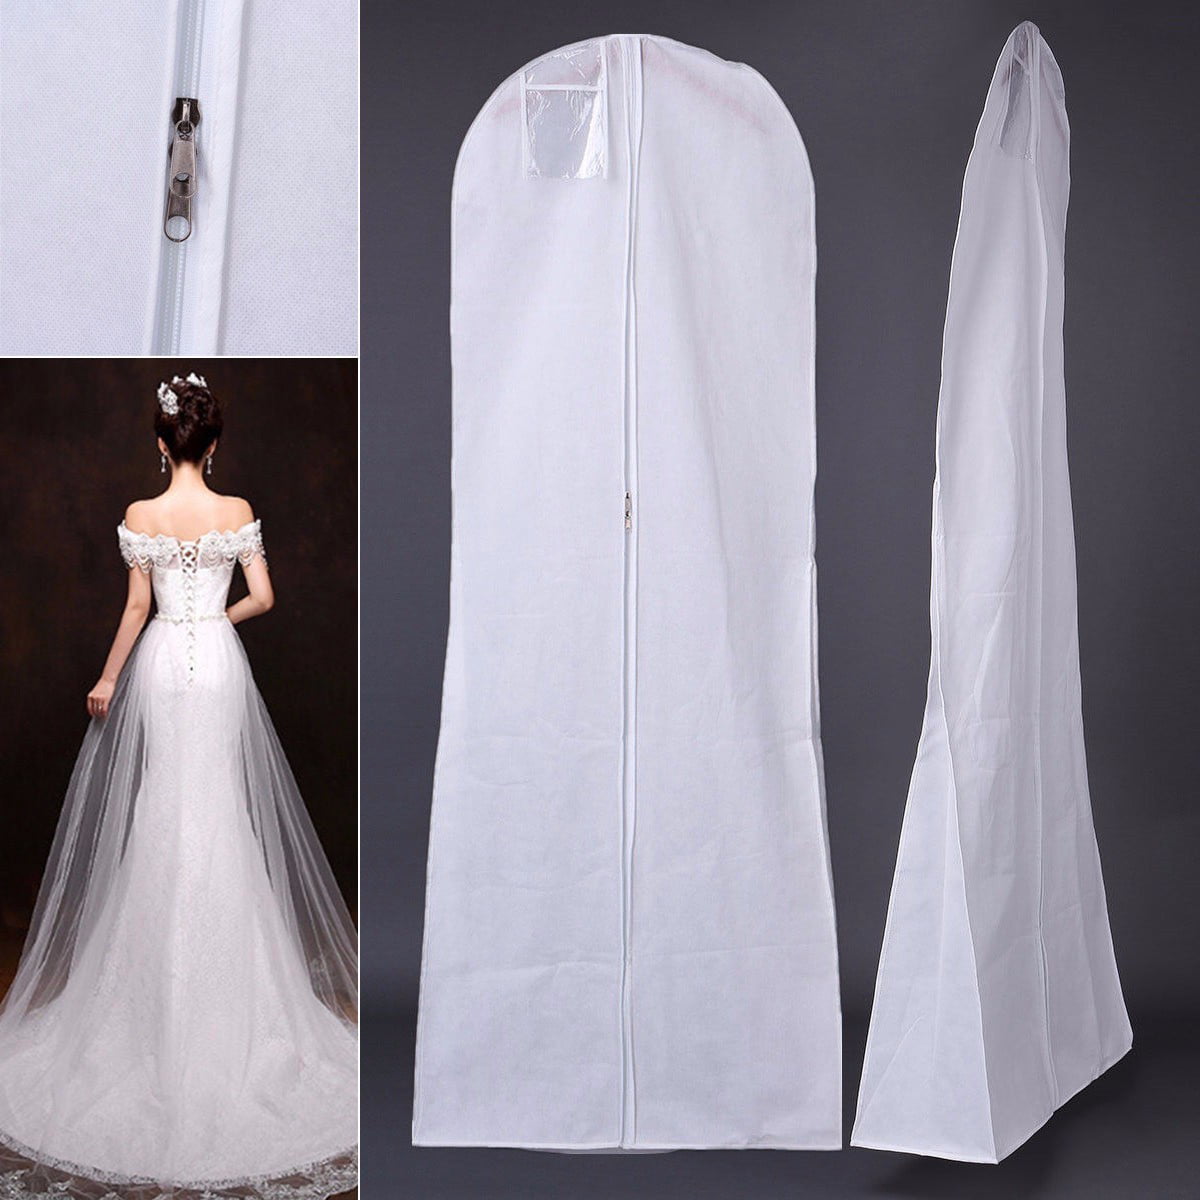 VANVENE Large Garment Bags 72 Saver Dustproof Cover Storage Bag Wedding Dress Bag Prom Ball Gown Garment Clothes Protector White